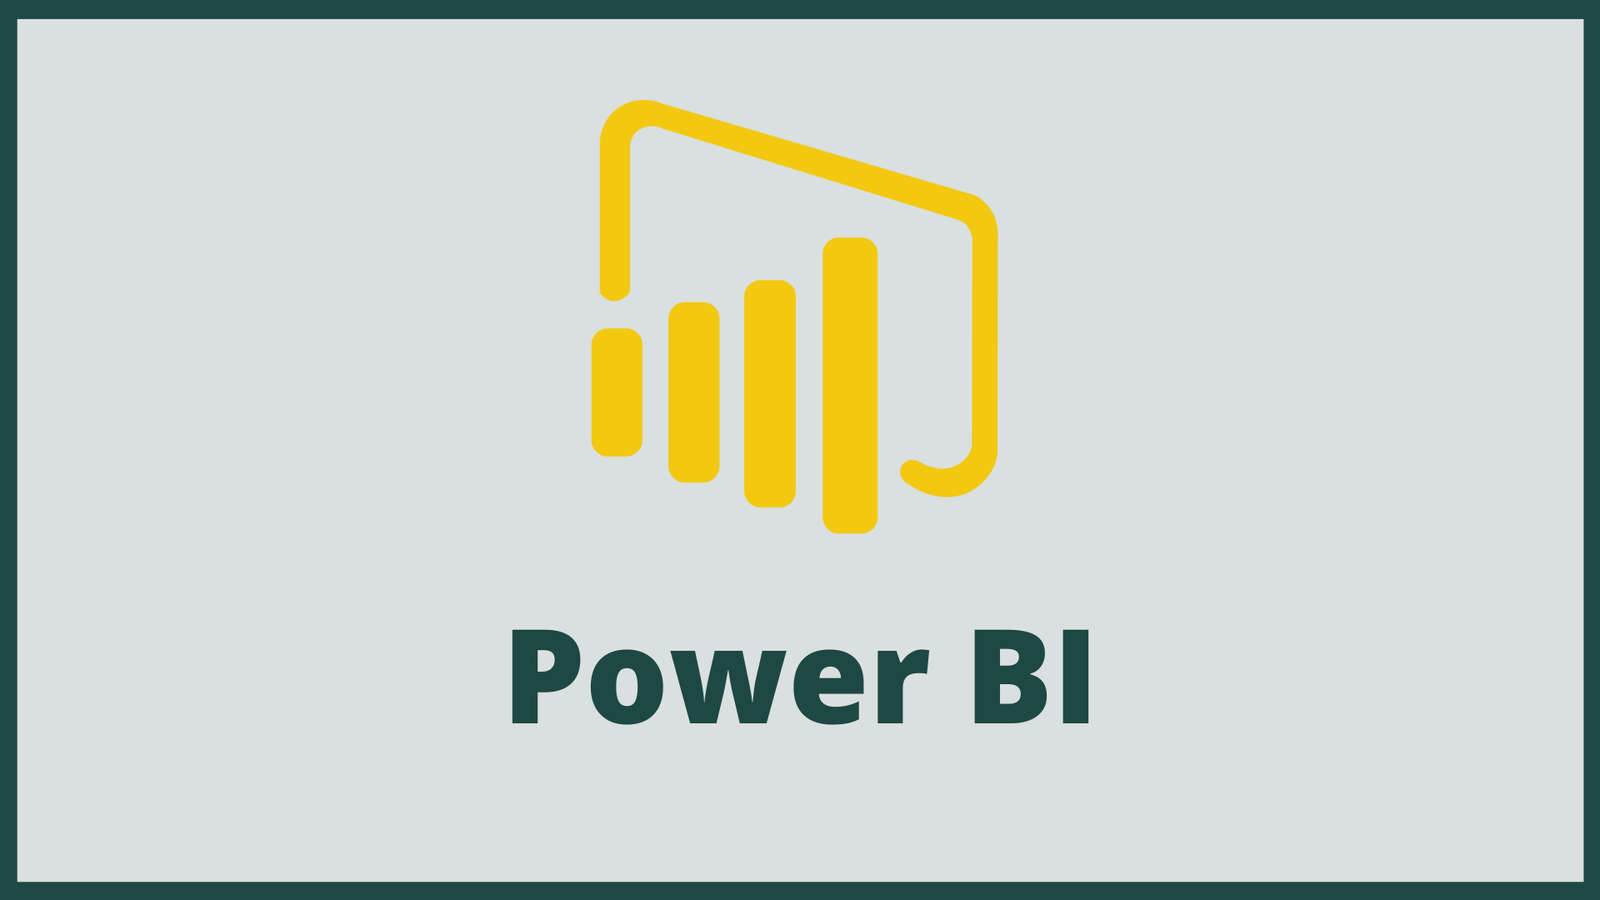 Power BI courses